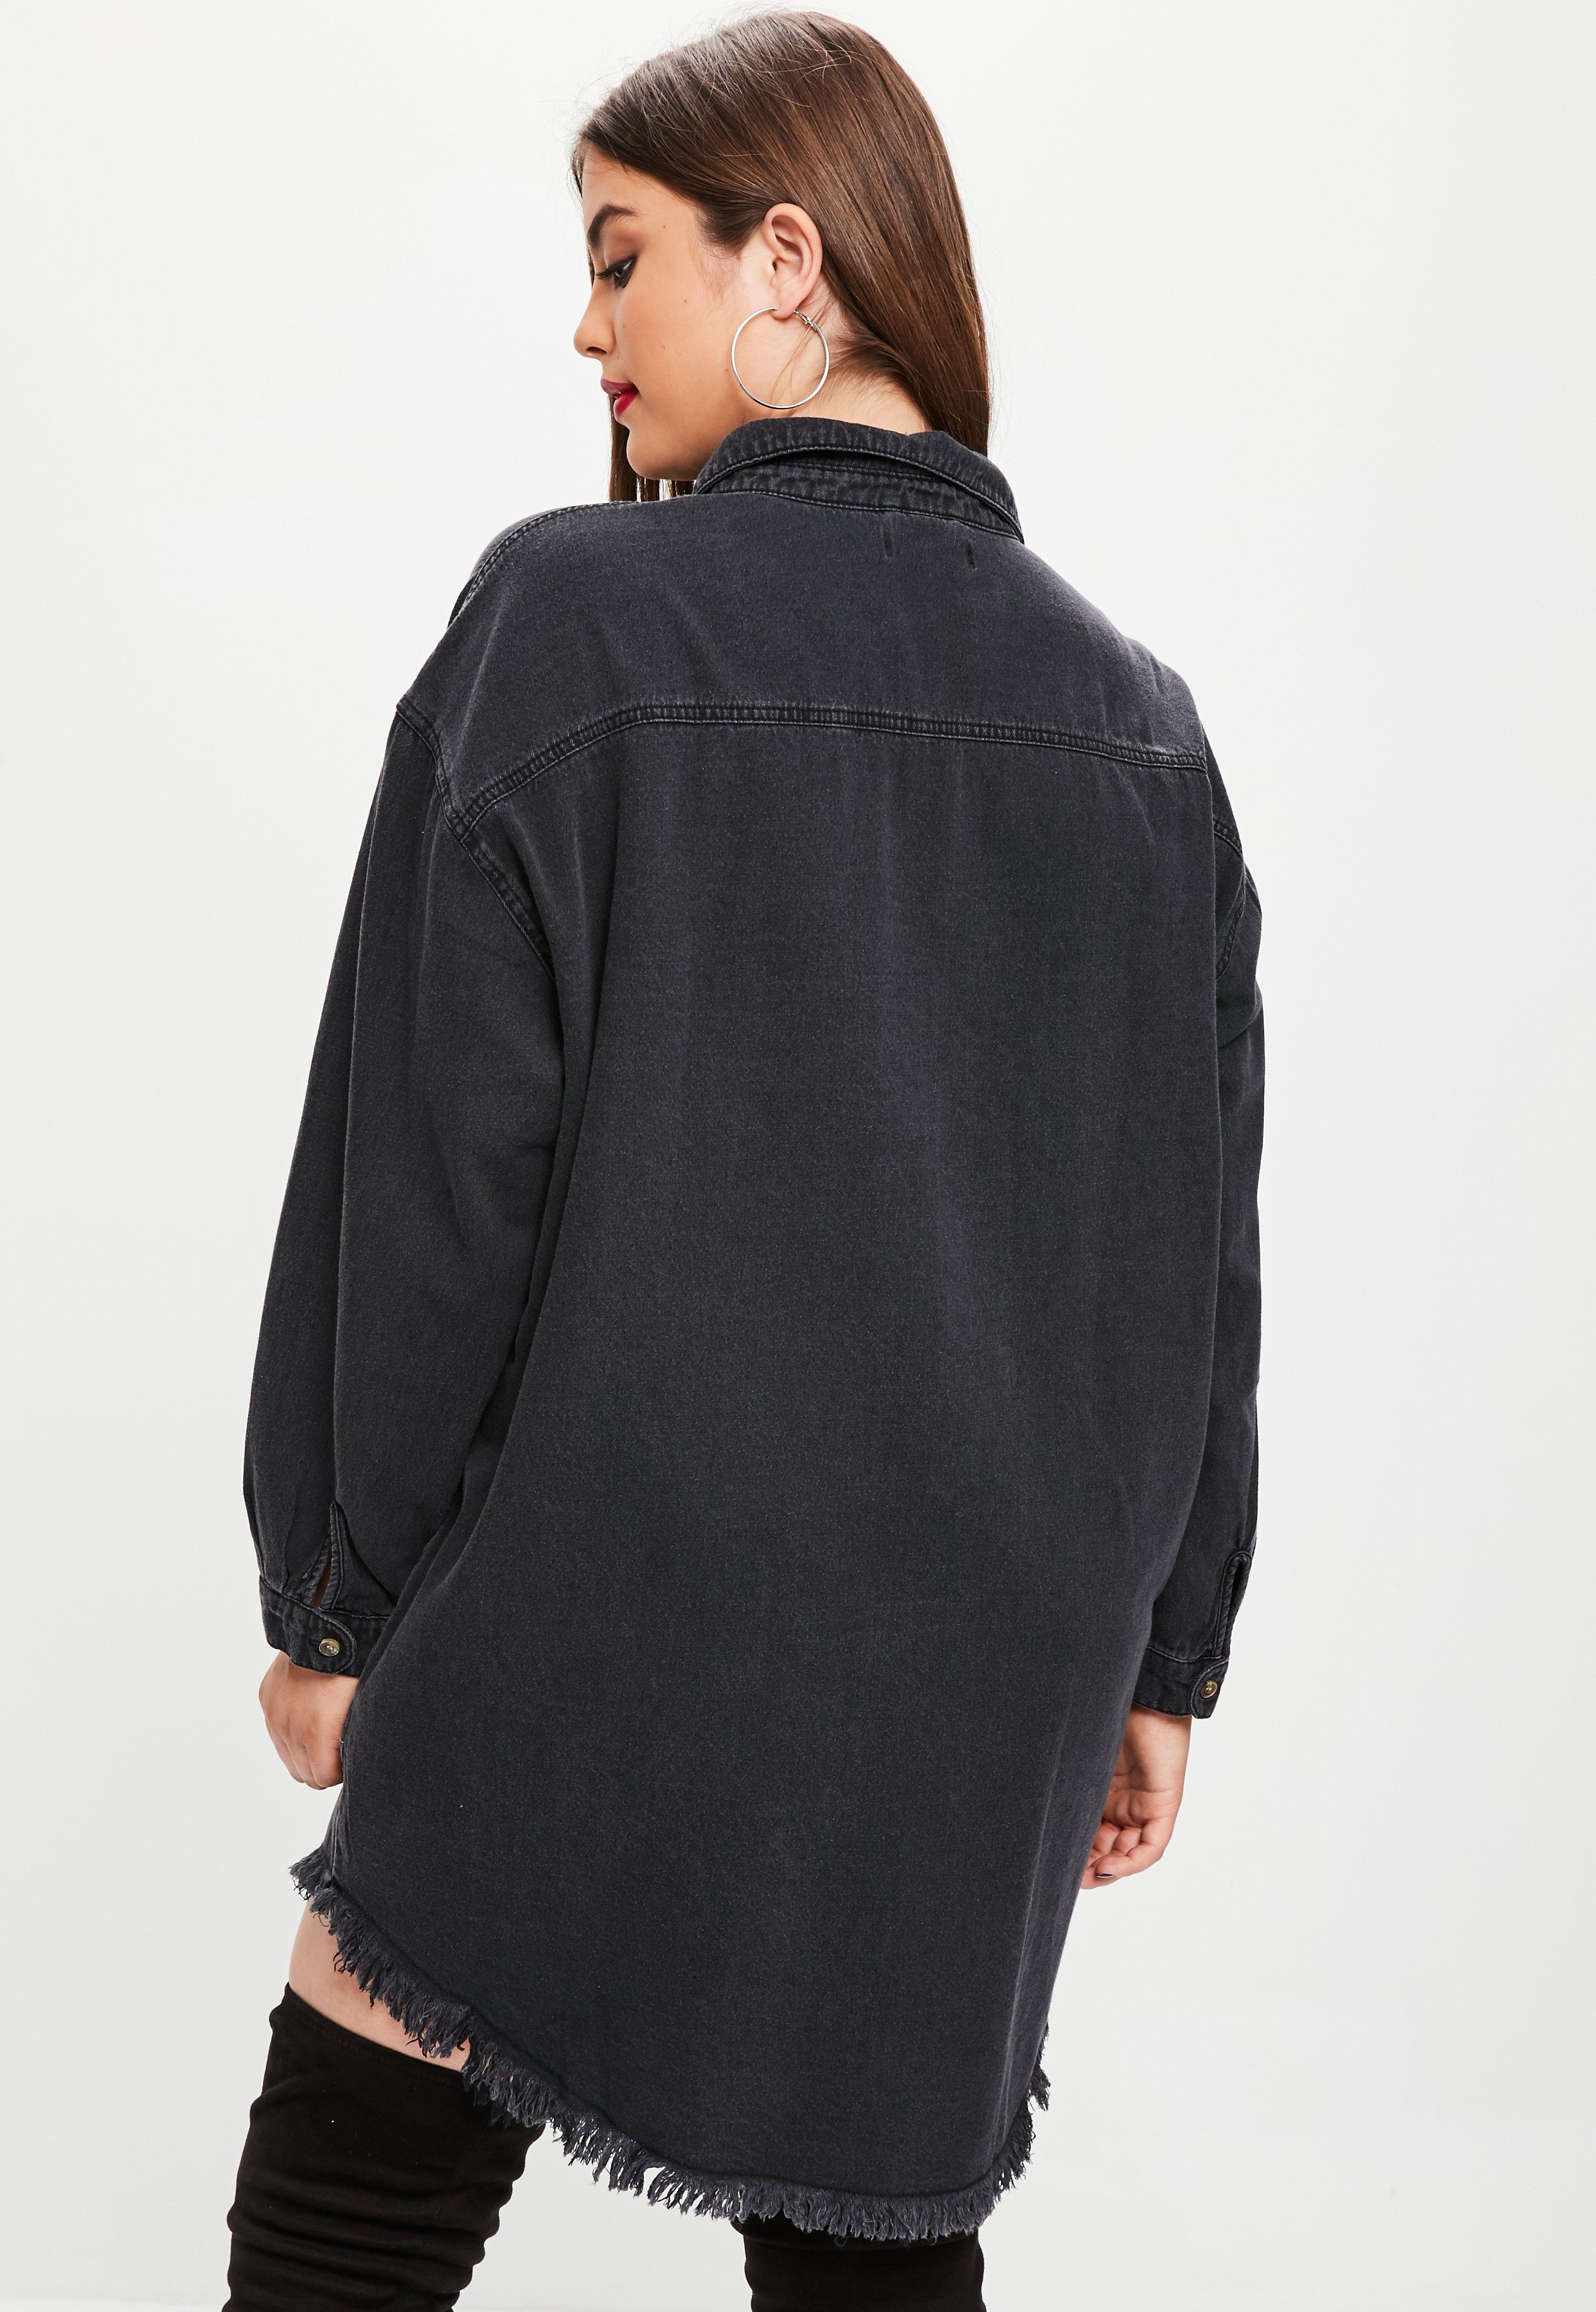 Lyst Missguided Plus  Size  Black Oversized  Denim  Shirt  